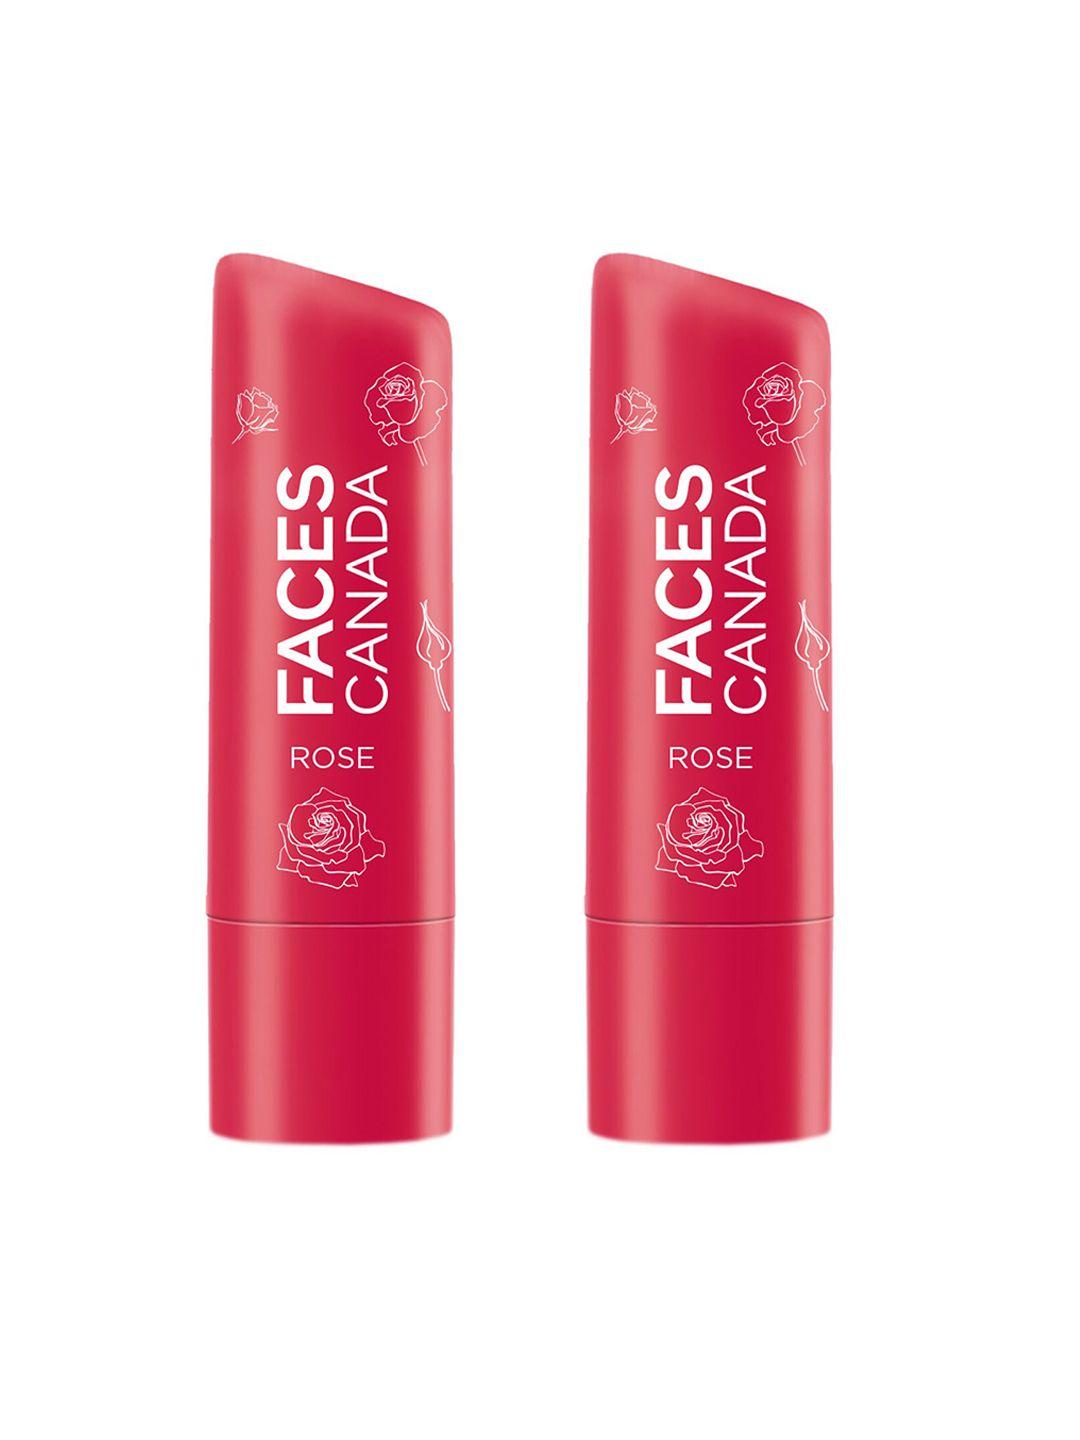 faces canada set of 2 vitamin c color lip balm with 12hr moisture & spf15 - rose petal